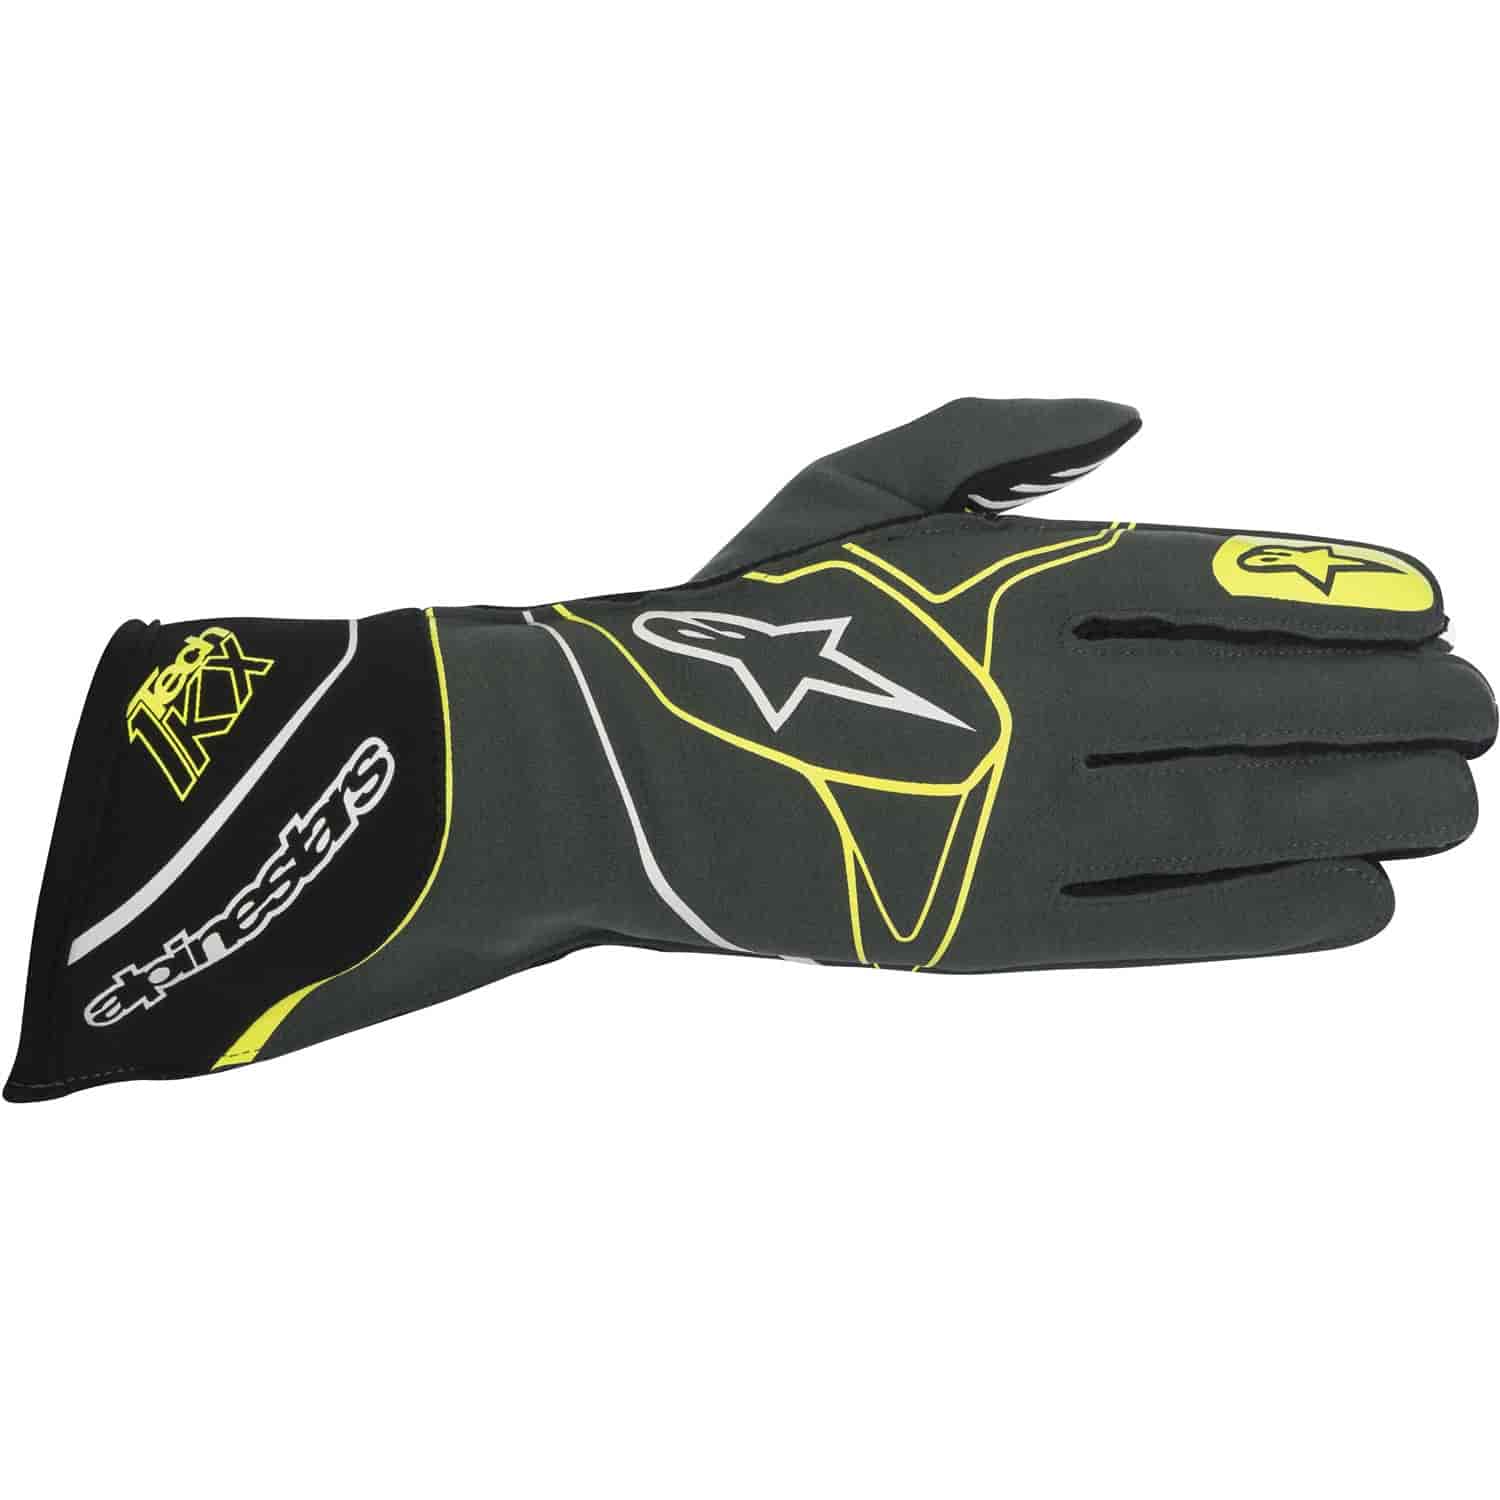 Tech 1-KX Gloves Anthracite/Black/Yellow Fluorescent